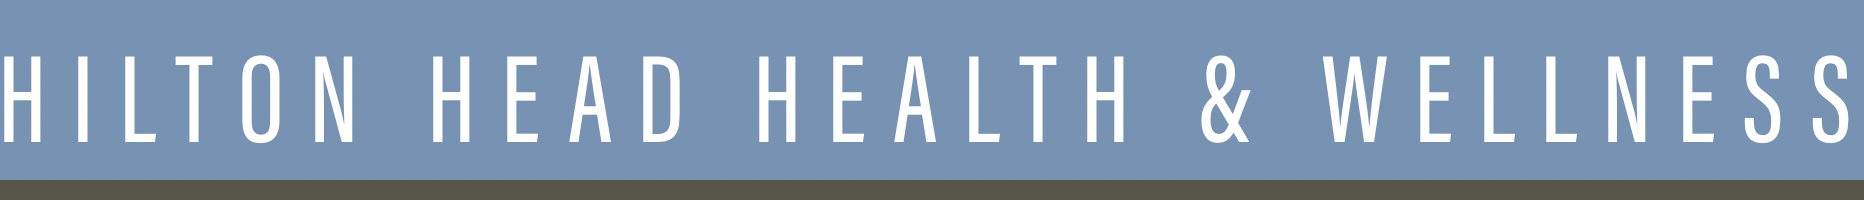 Hilton Head Health and Wellness